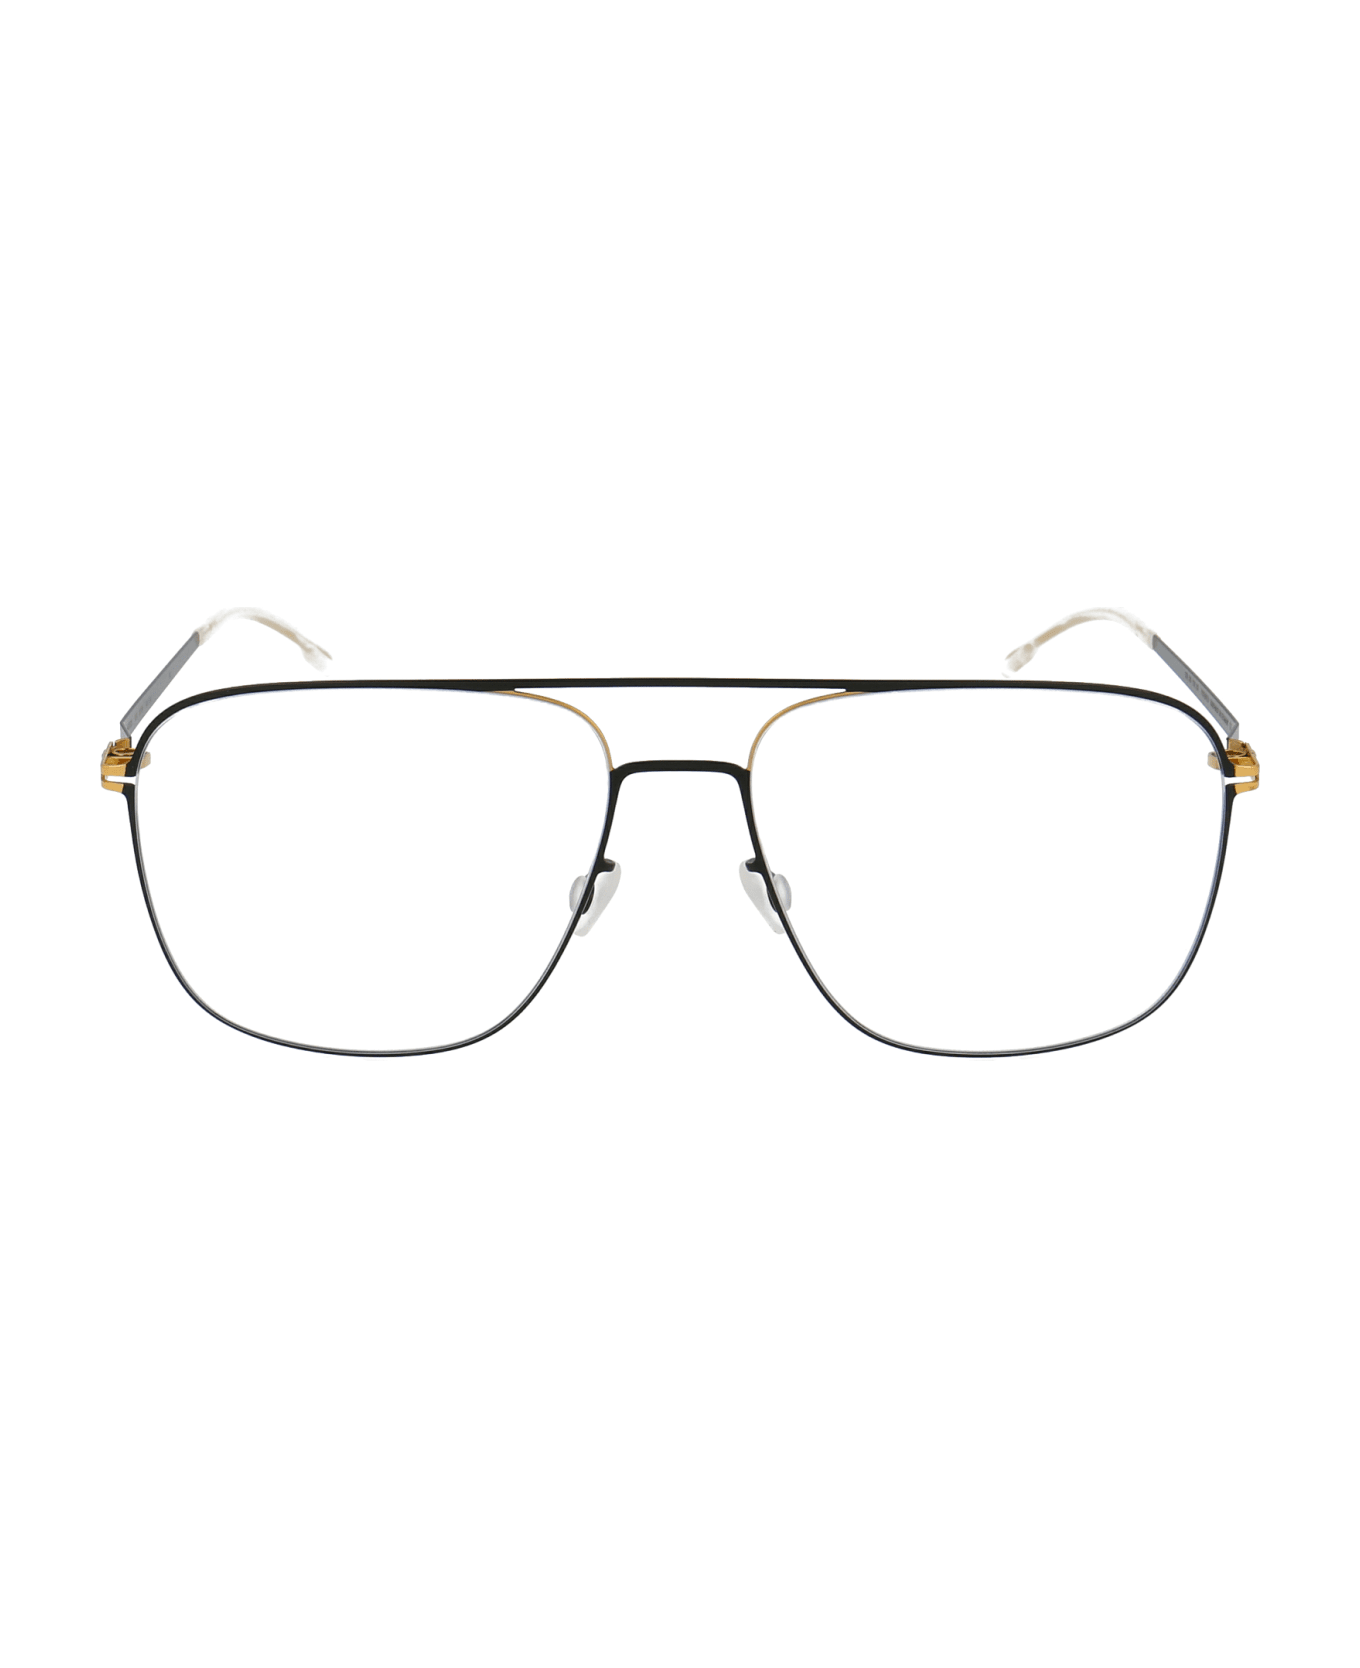 Mykita Steen Glasses - 167 Gold/Jet Black Clear アイウェア